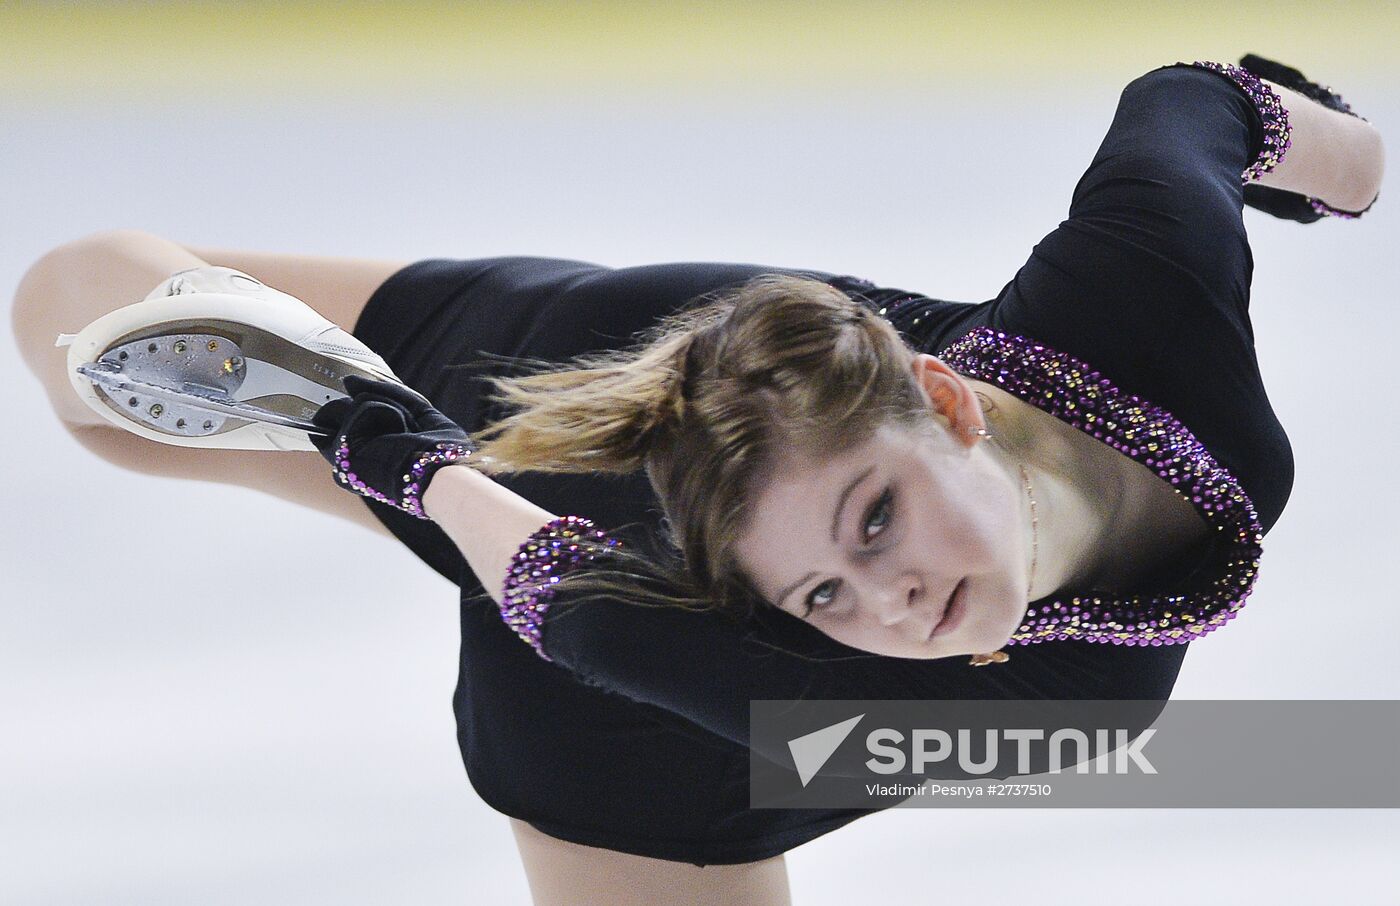 ISU Grand Prix of Figure Skating 2015/2016. Women's short program.